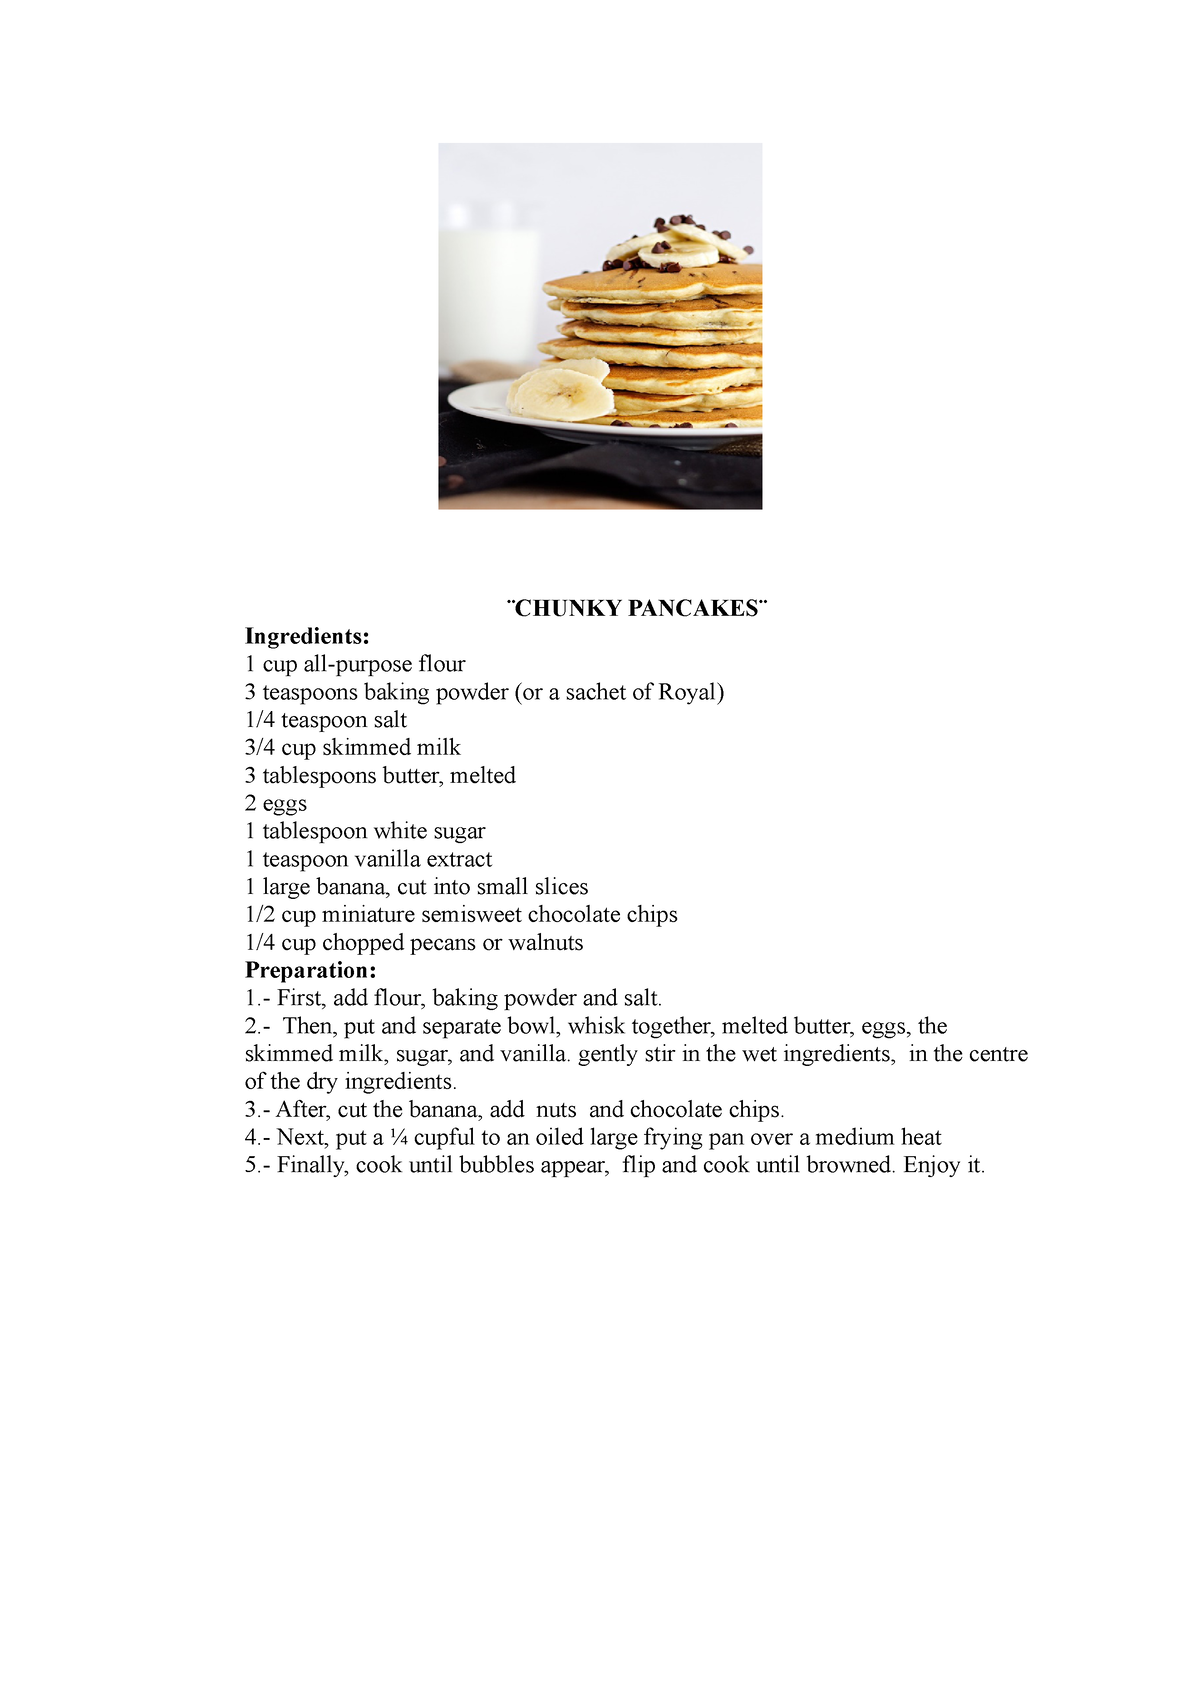 Chunky Pancakes - Uso de Cut y put en receta - ̈CHUNKY PANCAKES ̈  Ingredients: 1 cup all-purpose - Studocu